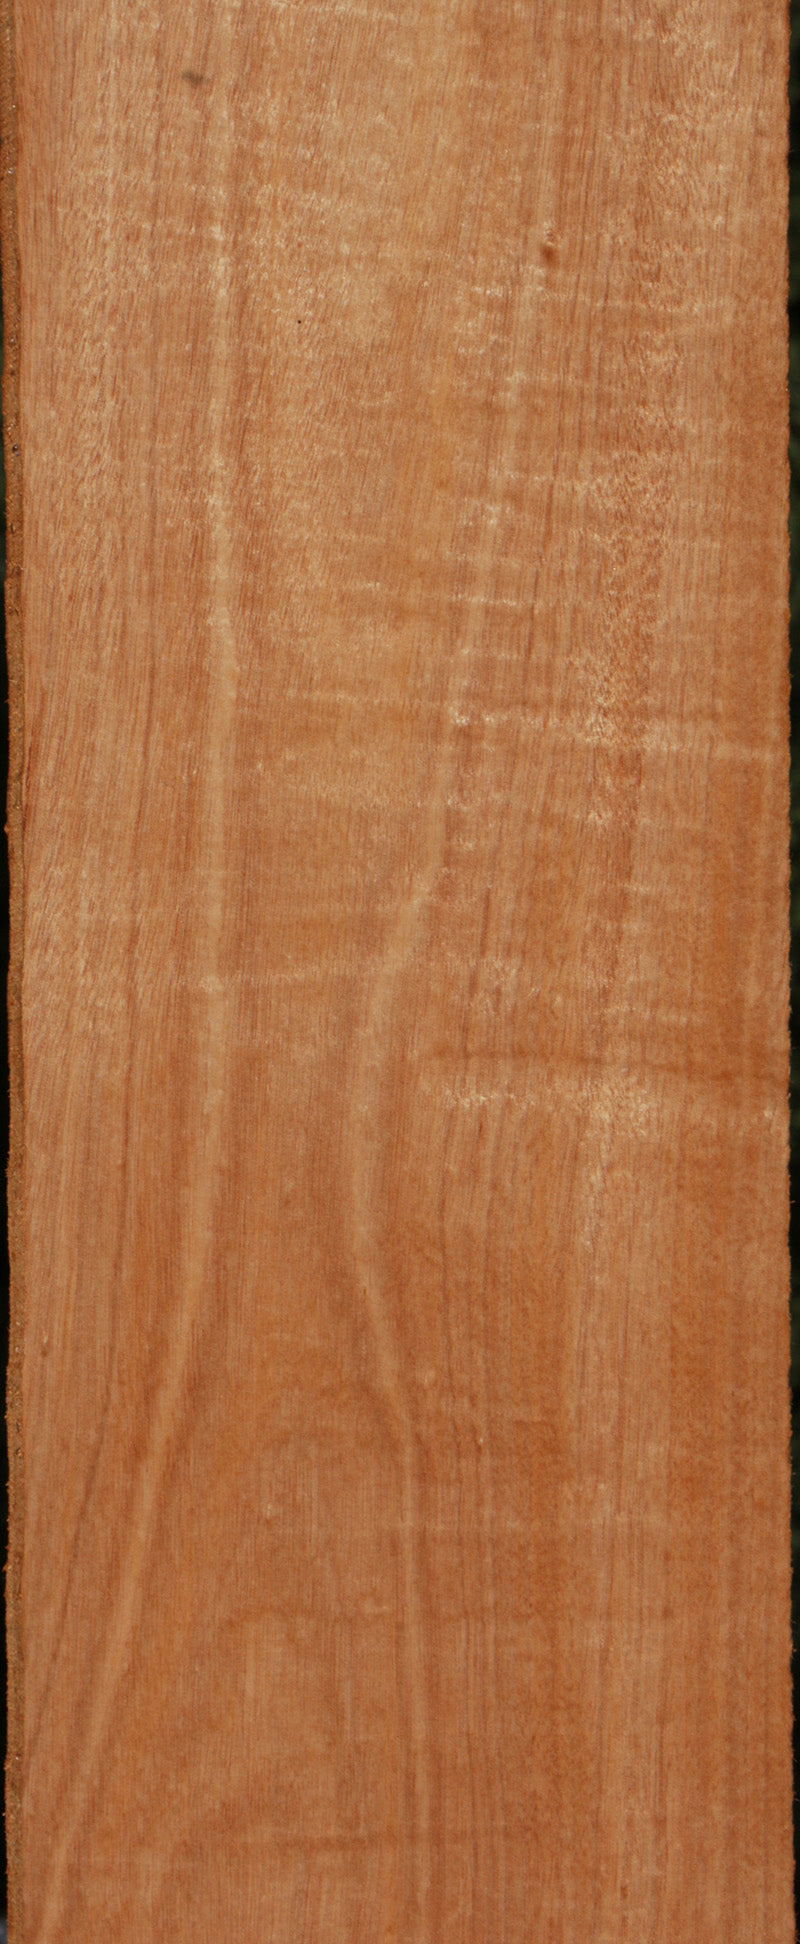 Okoume Lumber